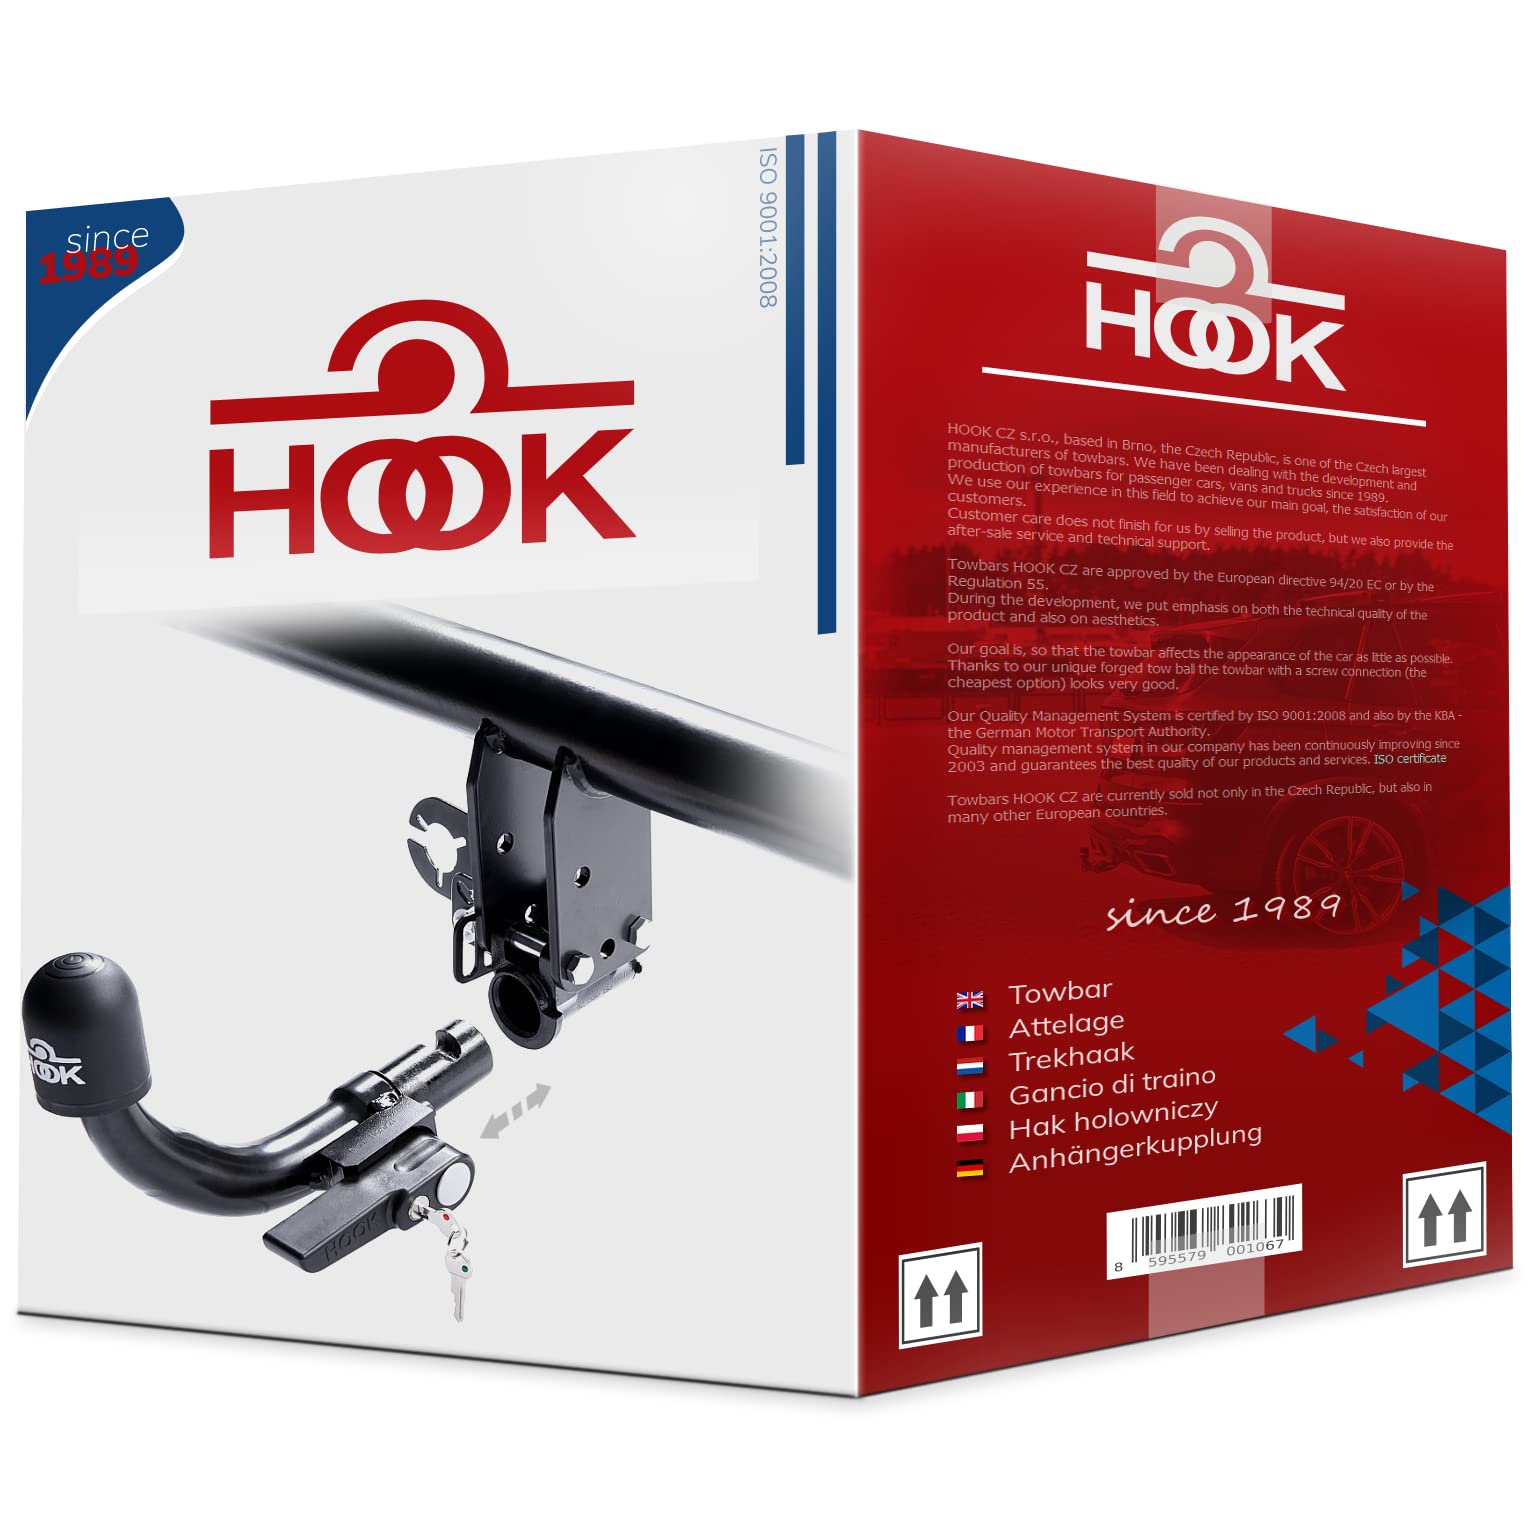 Hook horizontal abnehmbare AHK Anhängerkupplung für Skoda Octavia III Kombi 02.2013-2020 + universell Elektrosatz 13-polig von Hook